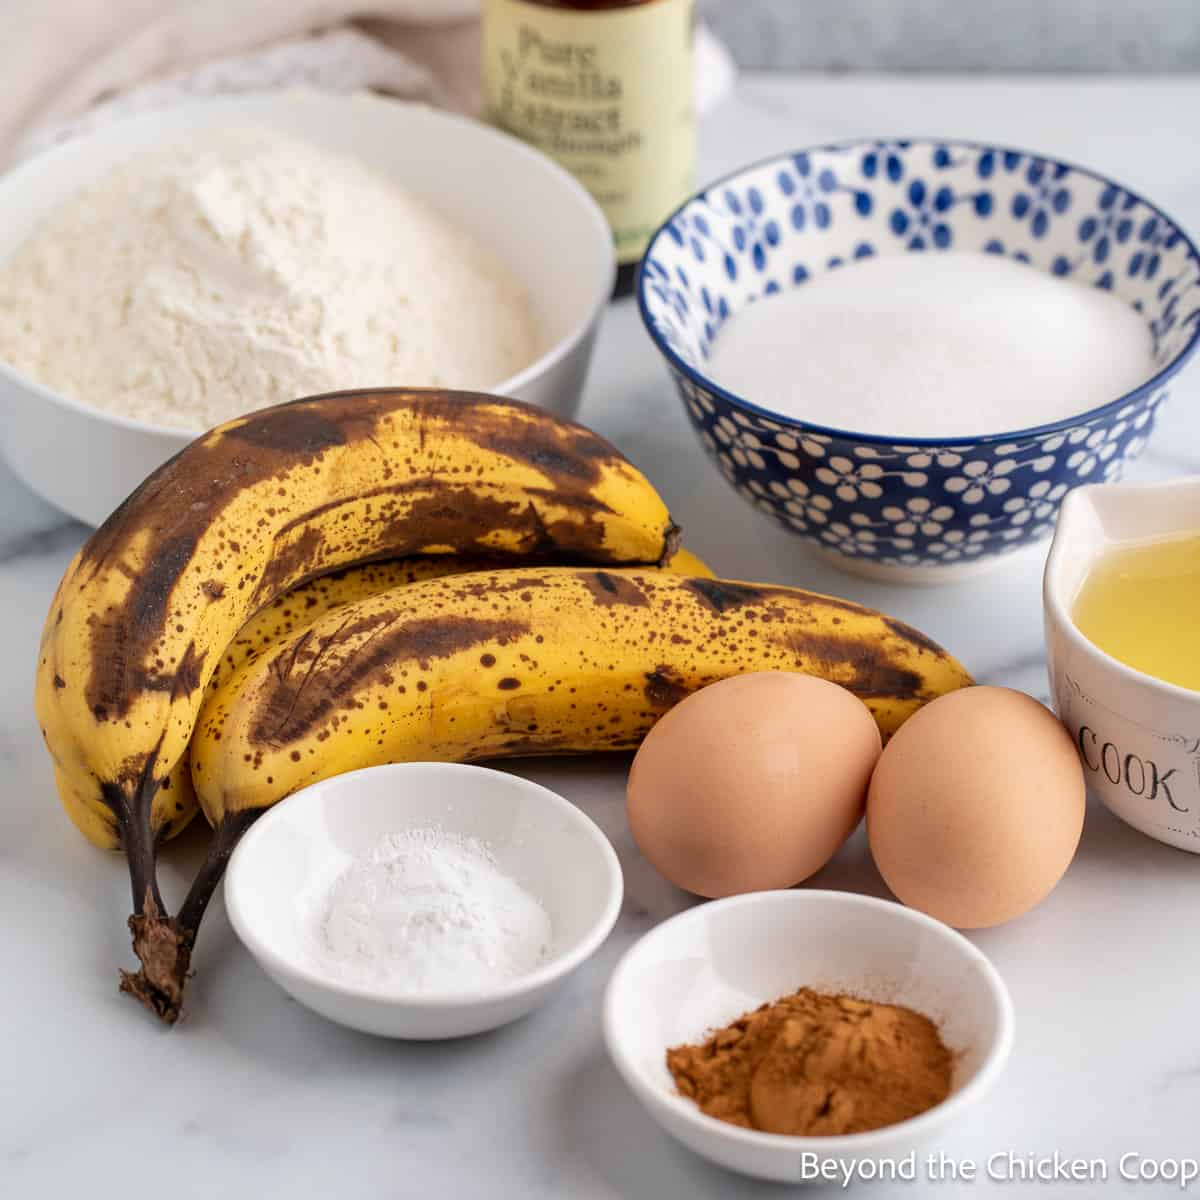 Ingredients for making banana muffins. 